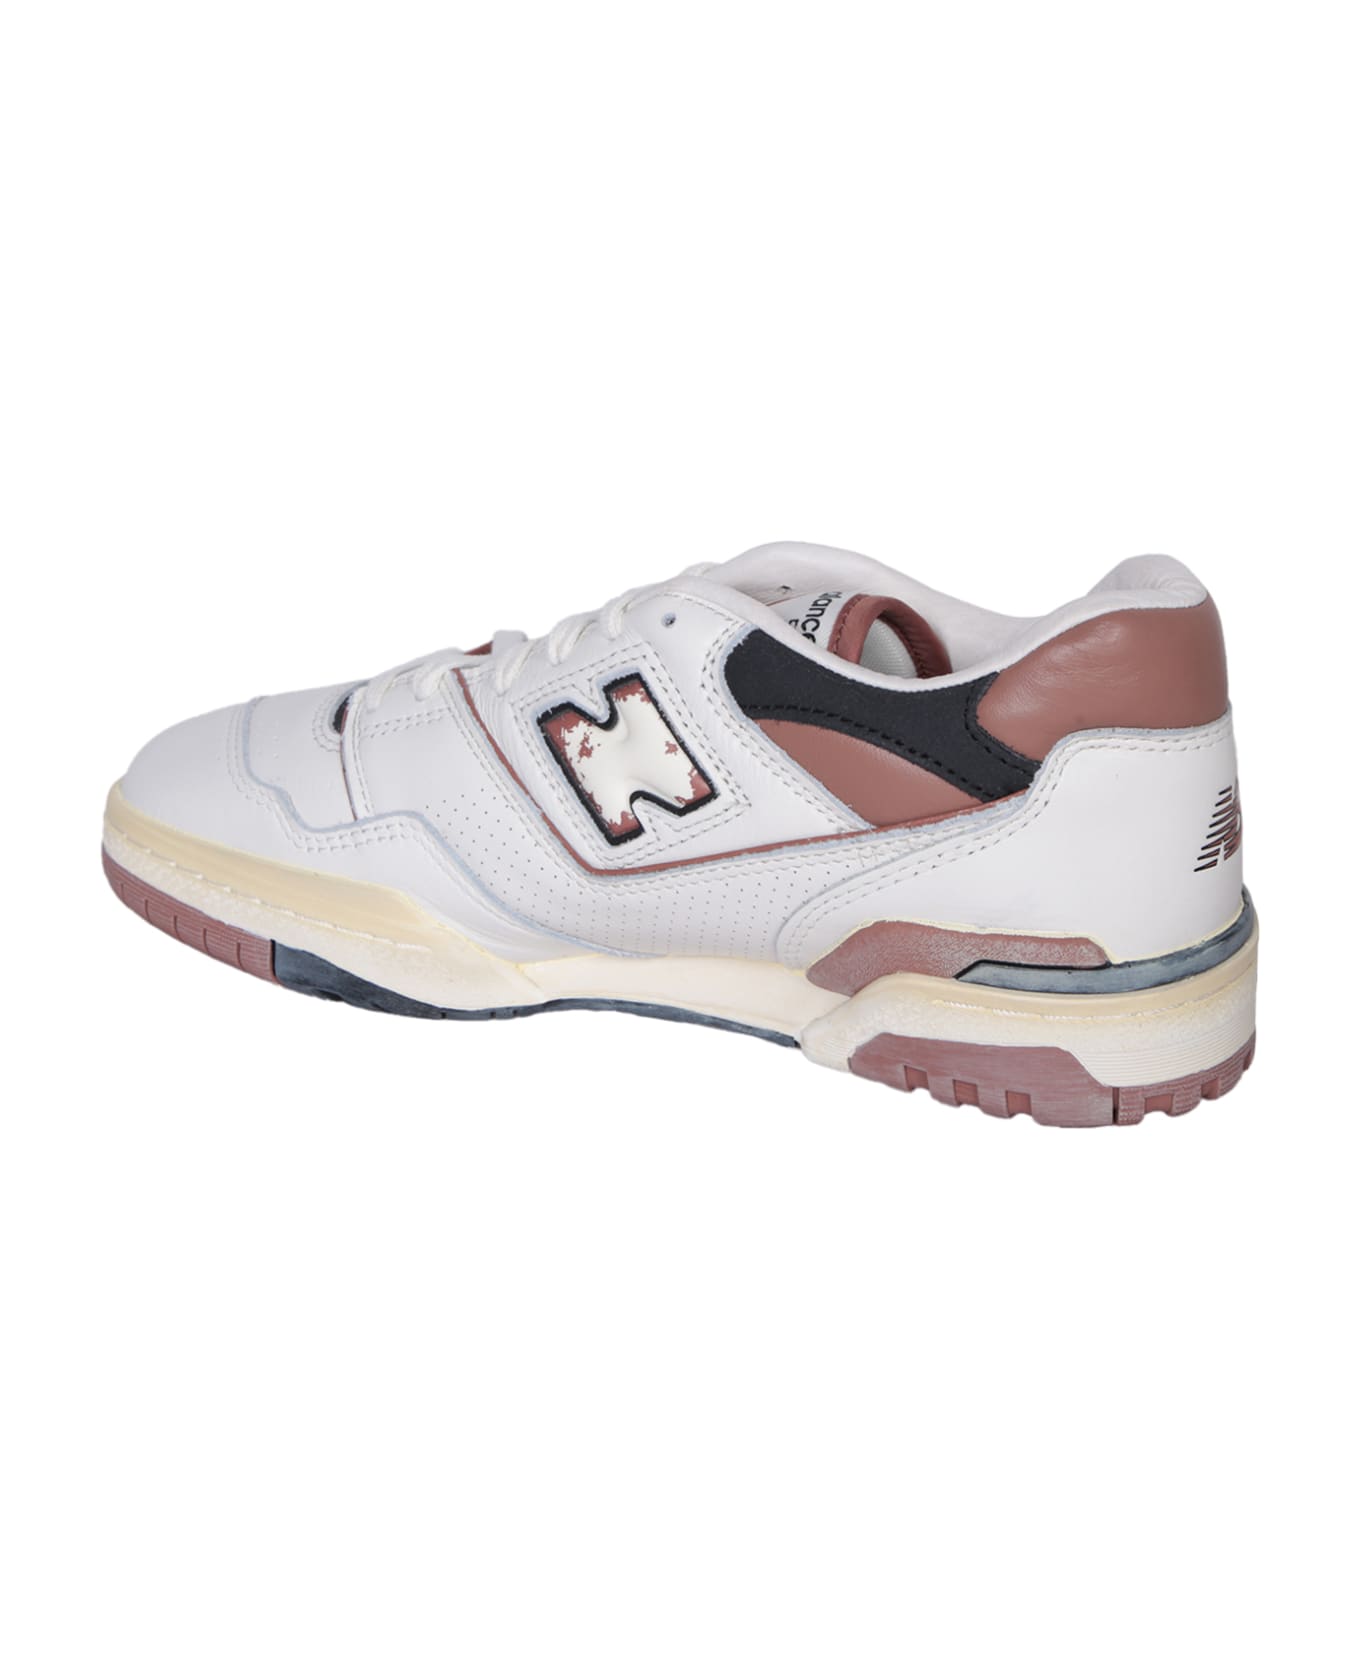 New Balance Bb550 White/brown Sneakers - White